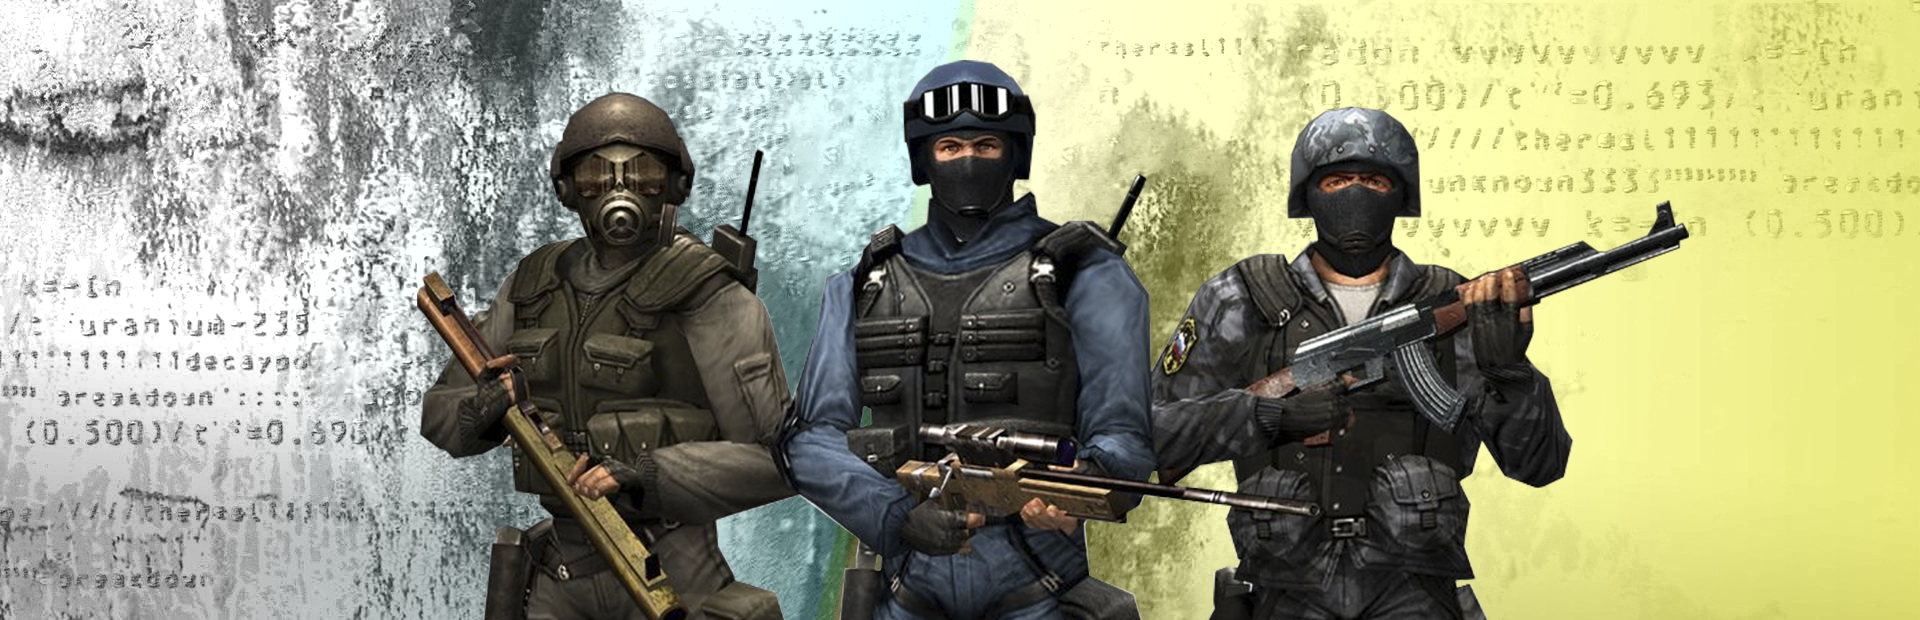 Counter Strike Condition Zero Download Kickass - Colaboratory